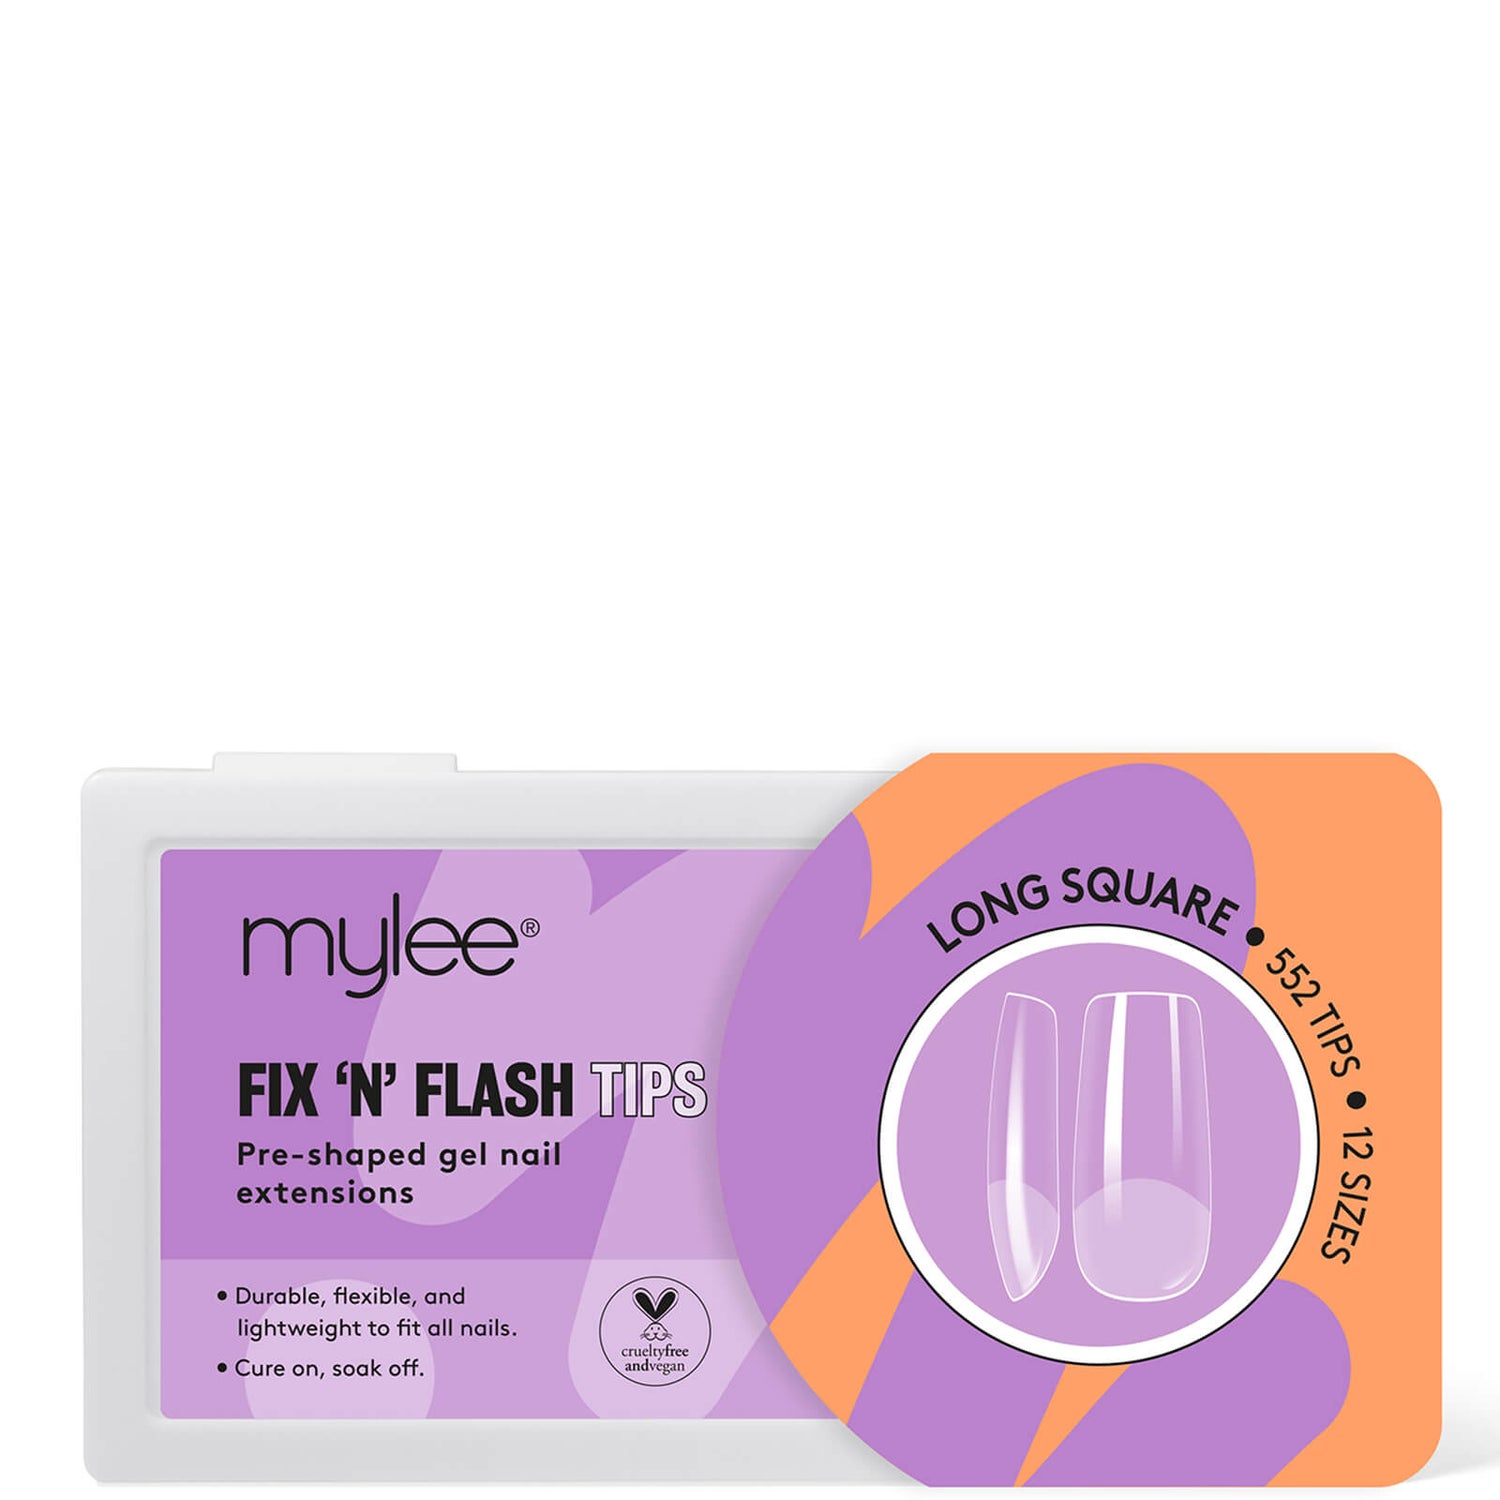 Mylee Fix 'n' Flash Tips - Long Square